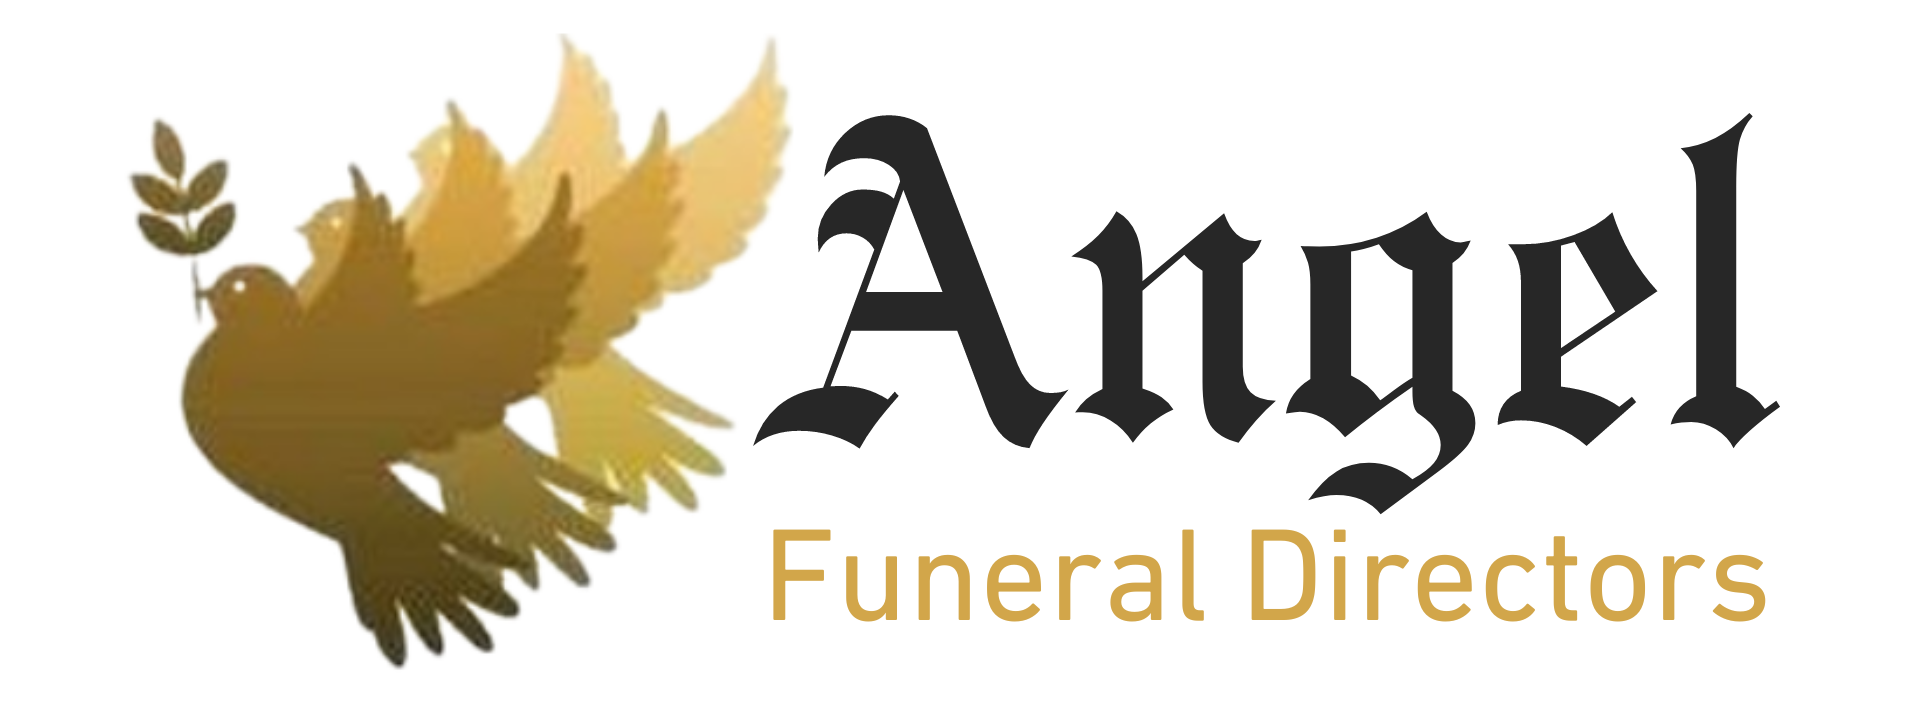 Angel Funeral Directors ltd